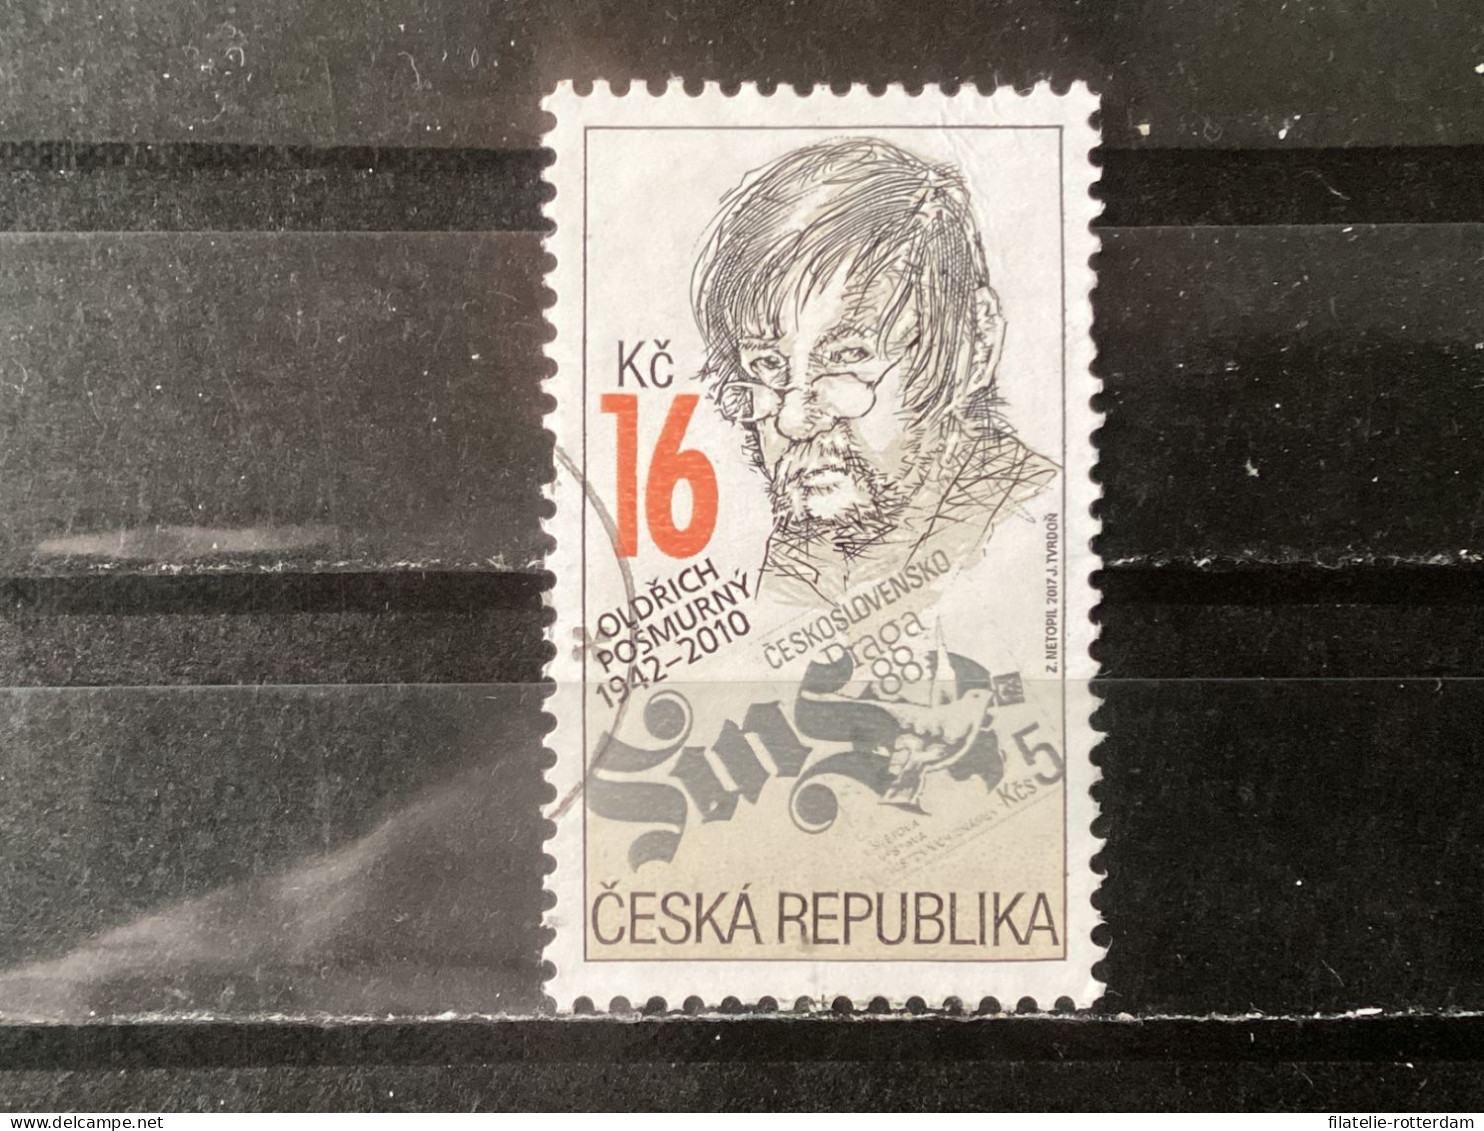 Czech Republic / Tsjechië - Czech Stamp Design (16) 2017 - Used Stamps